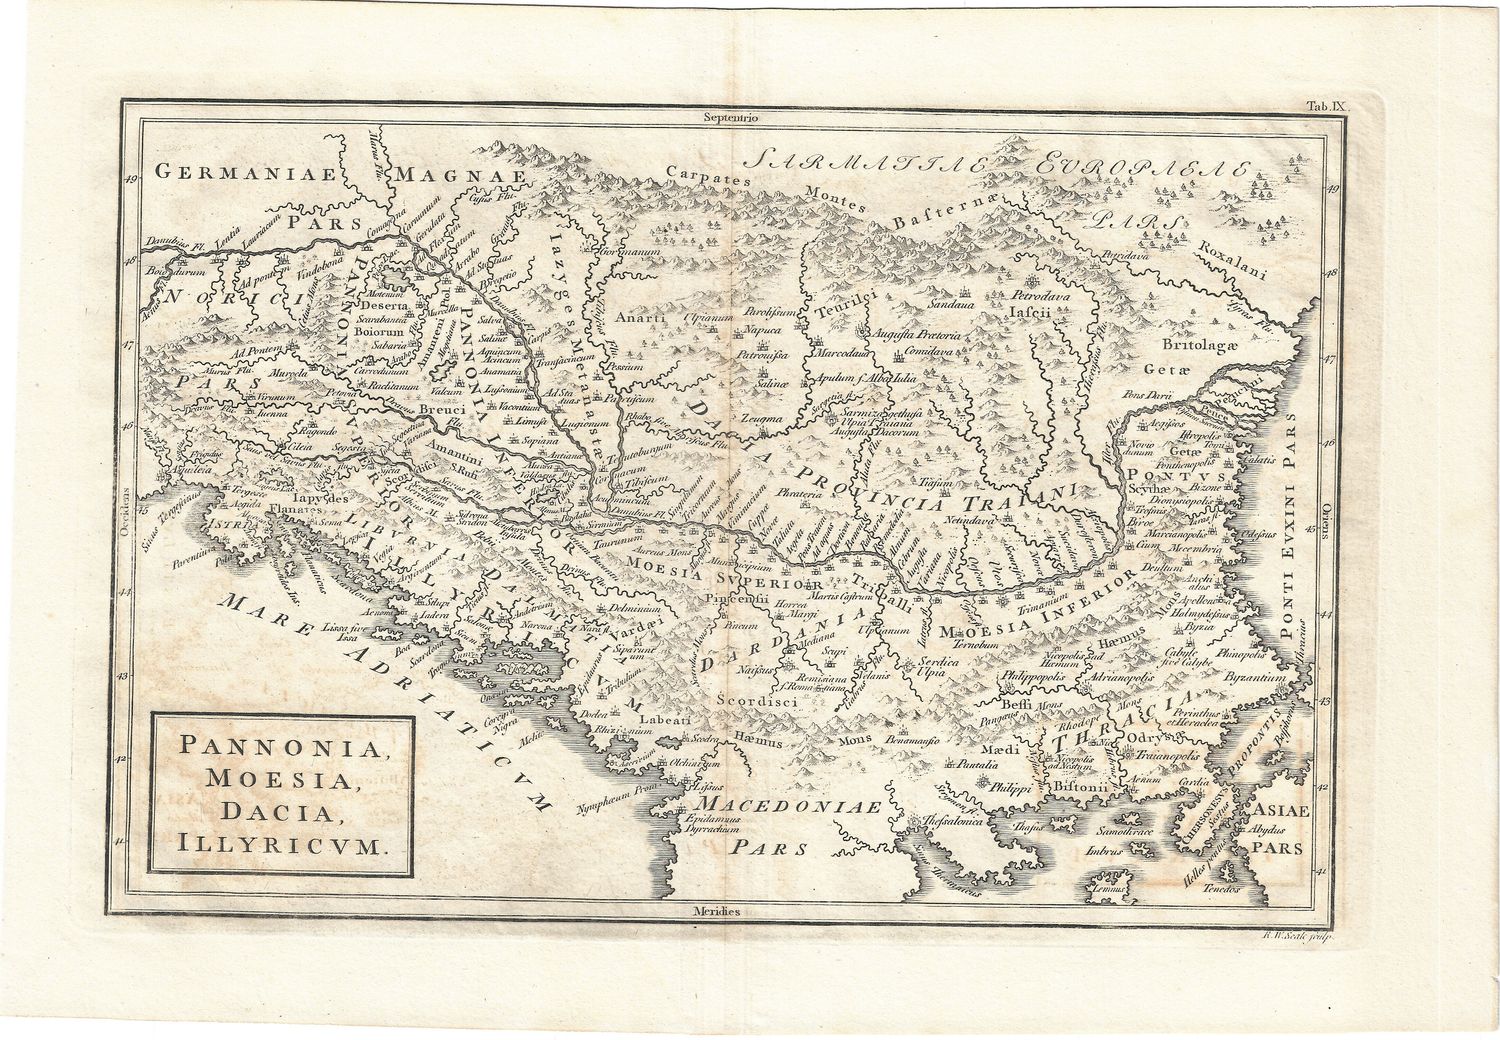 1815 Geographia Antiqua Map of Pannonia, Moesia, Dacia, Illyricvm by Cellarius